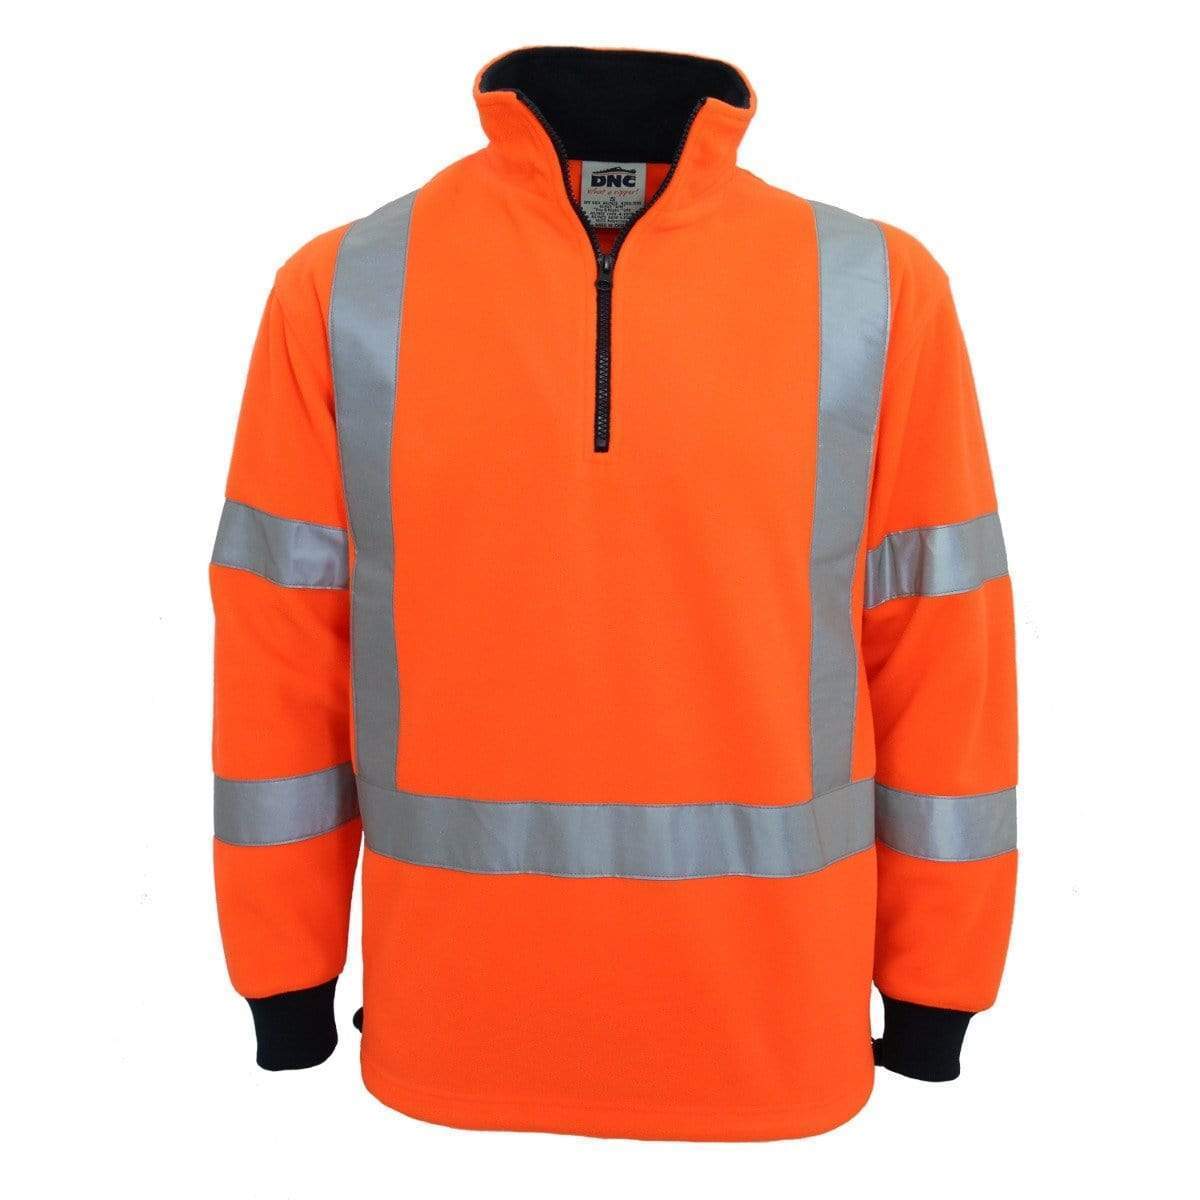 Dnc Workwear Hi-vis "X" Back & Bio-motion Taped Polar Fleece - 3730 Work Wear DNC Workwear Orange XS 